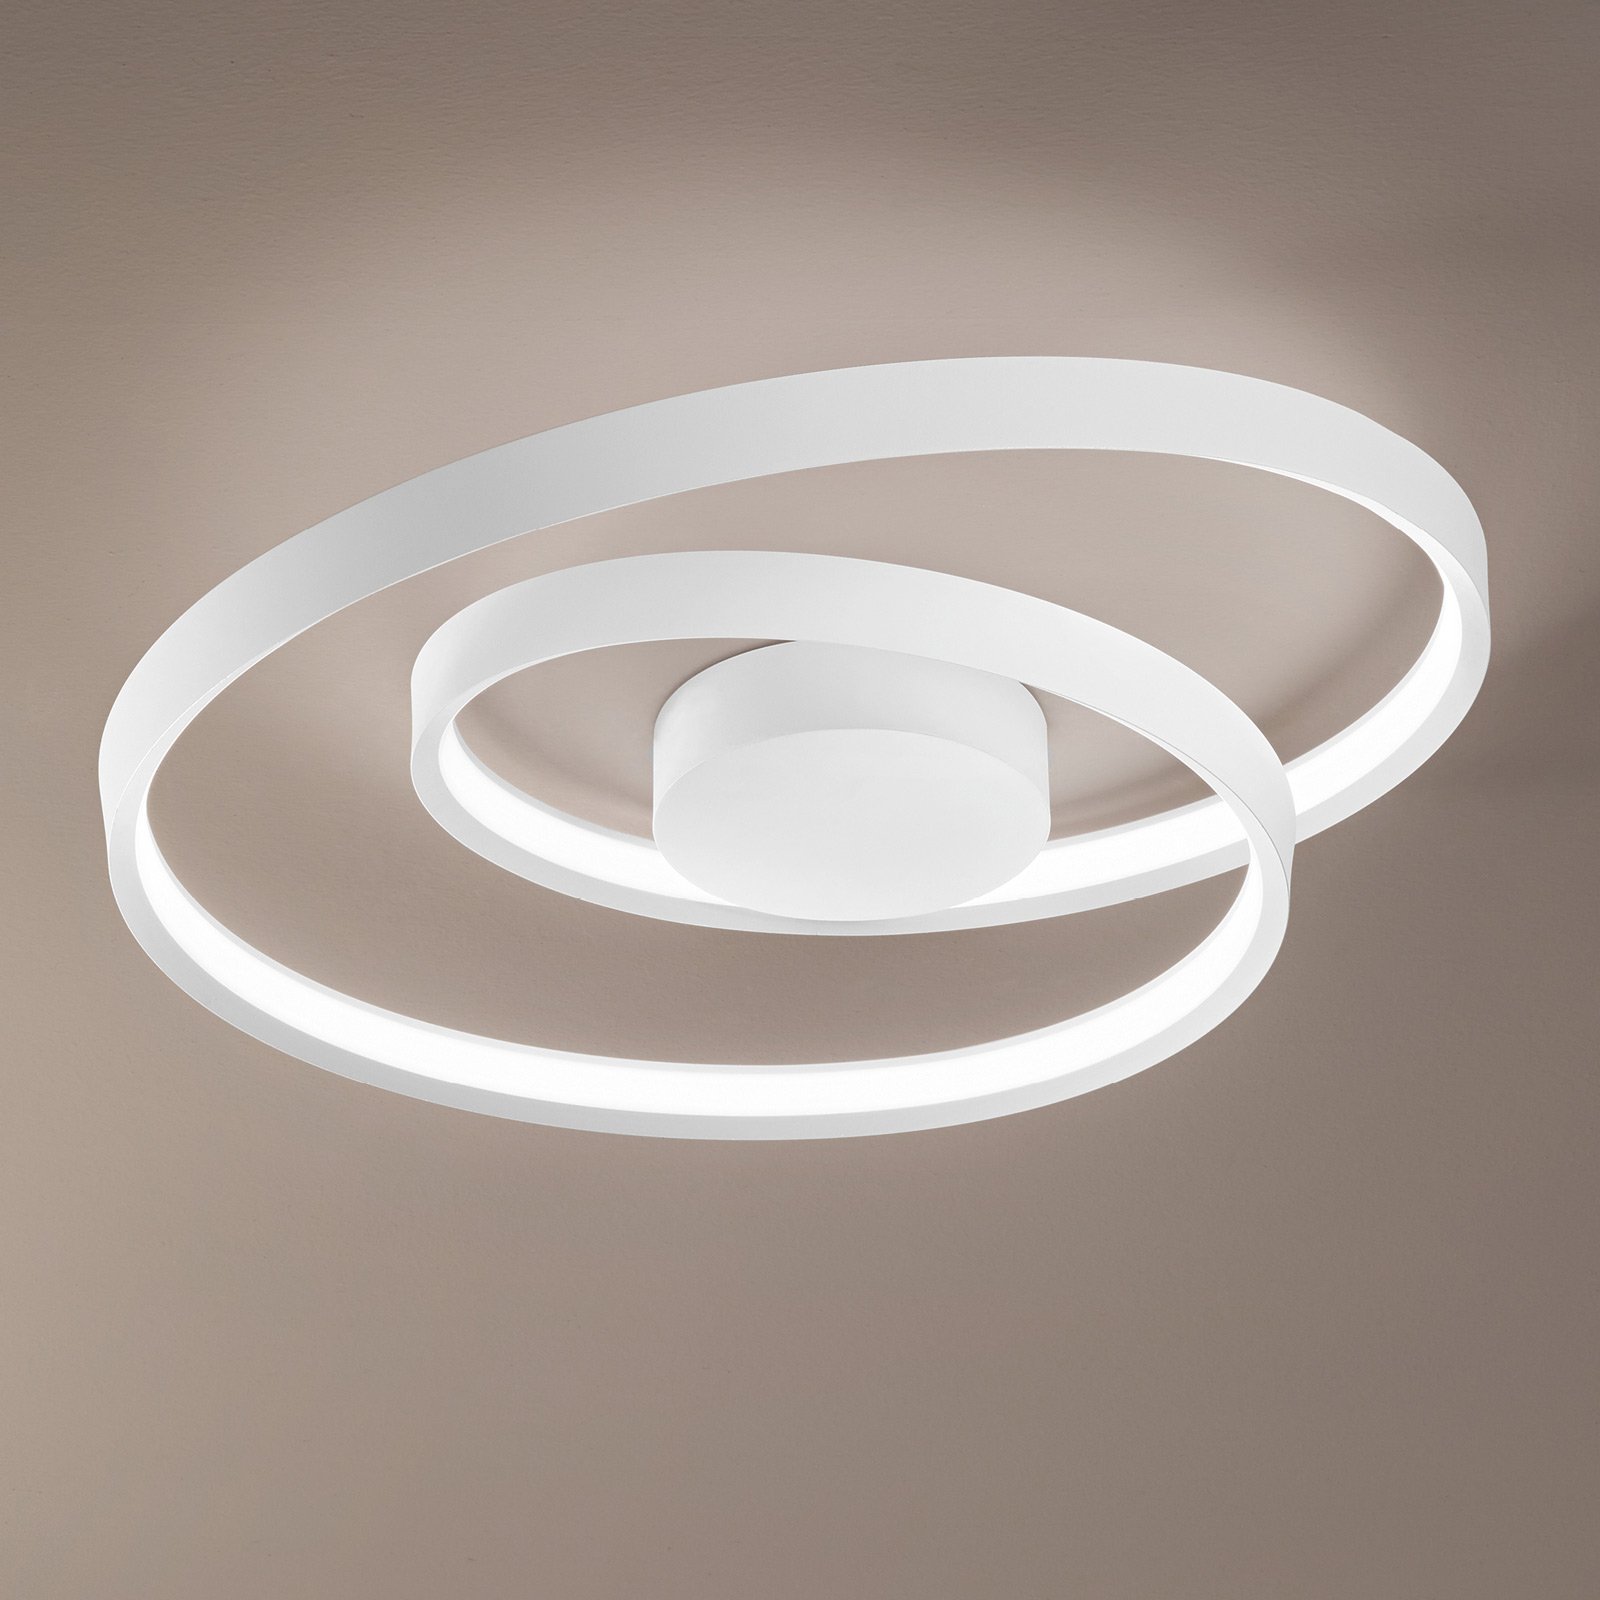 Lampa sufitowa LED Ritmo, Ø 80 cm, biała